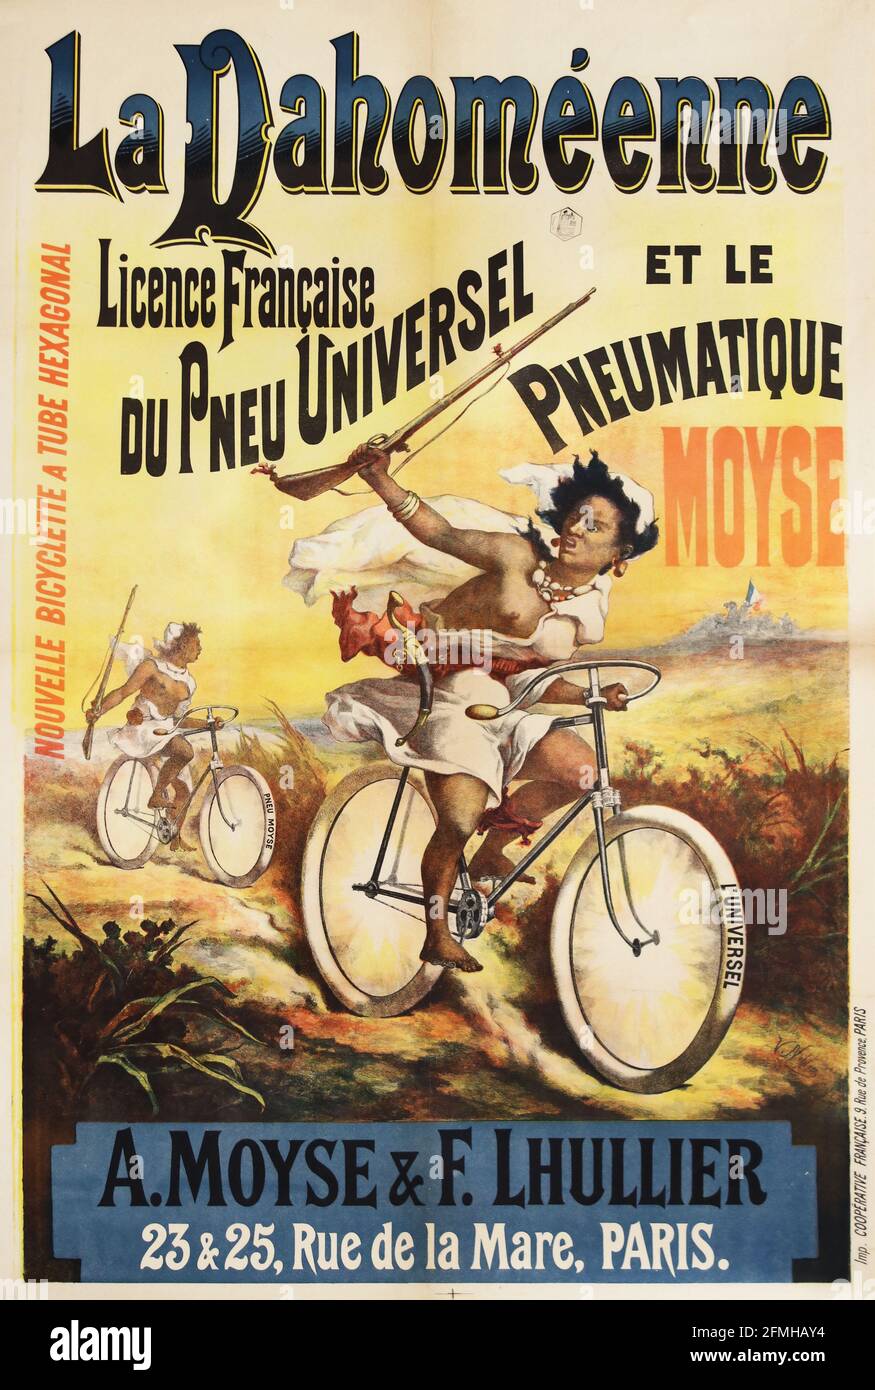 La Dahoméenne. Lizenz Francaise du Pneu Universel. Moyse. Fahrradwerbeposter. Alt und vintage. Stockfoto